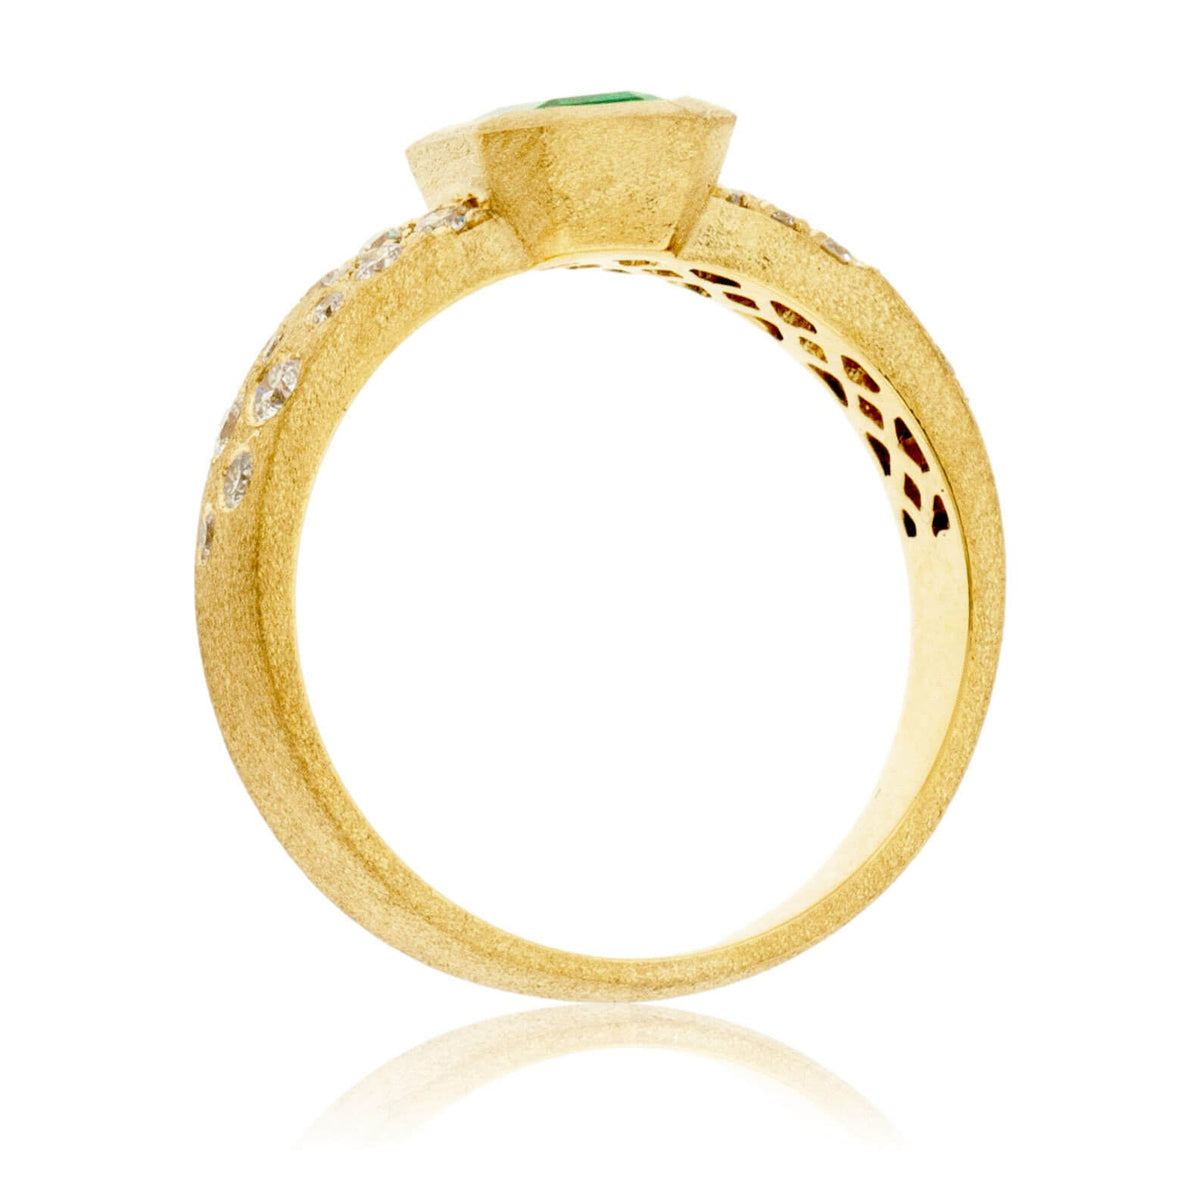 Bezel Set Emerald-Cut Emerald in Yellow Gold with Flush Set Diamond Band - Park City Jewelers